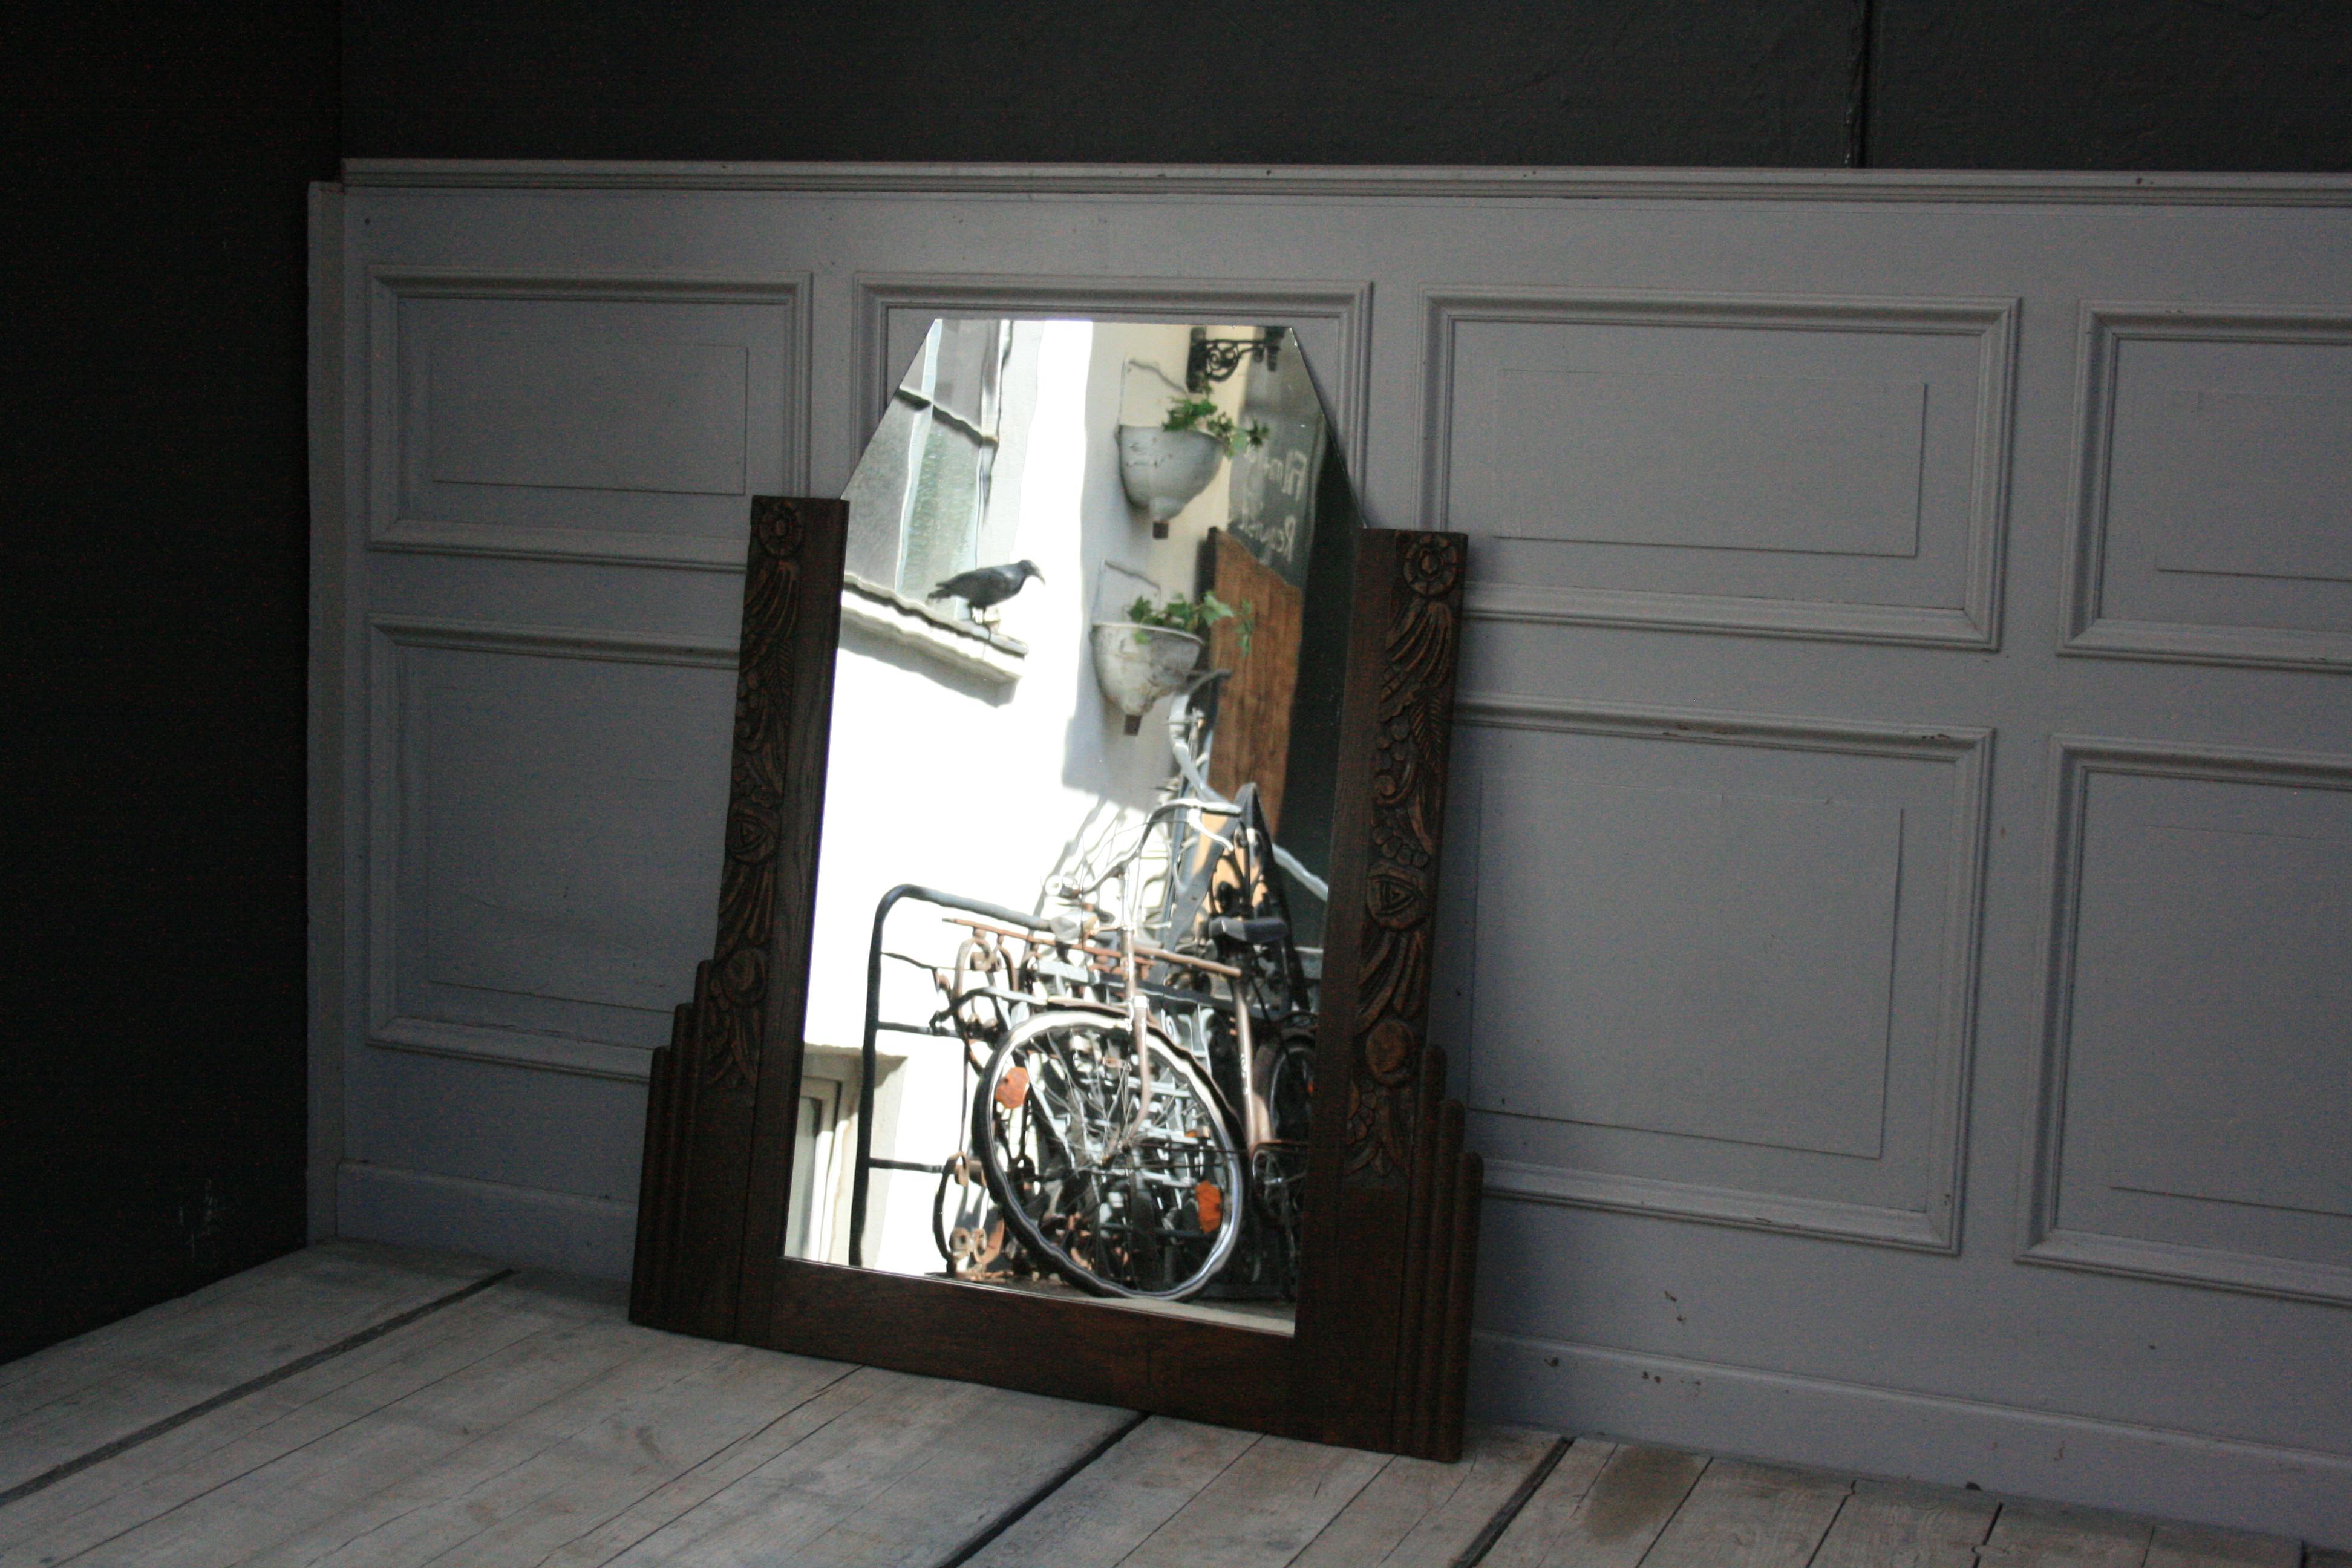 French Art Deco Mirror